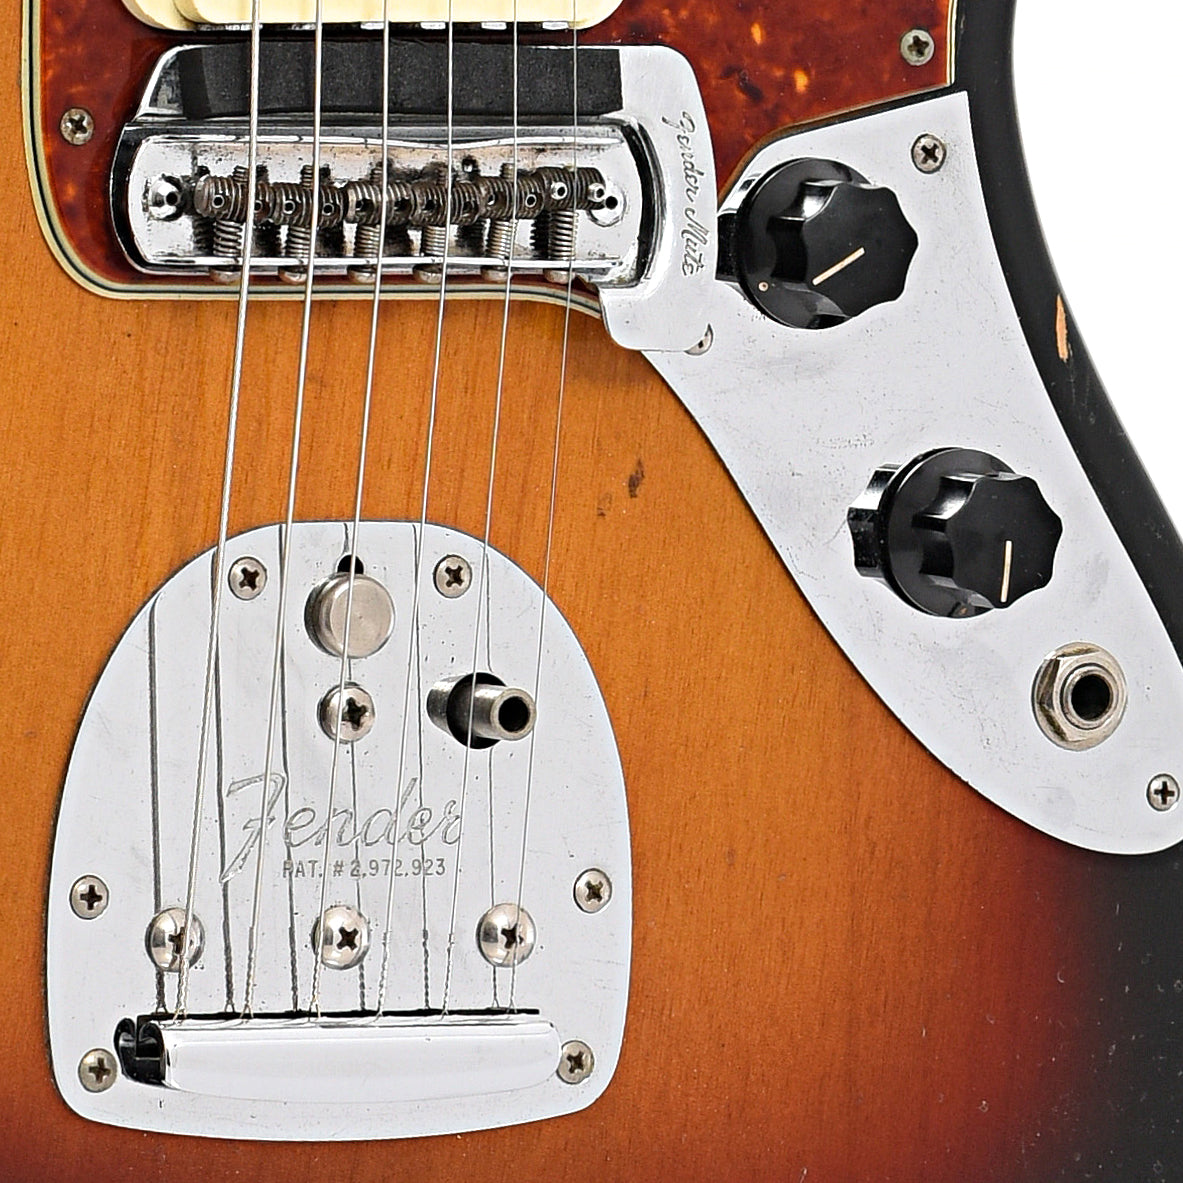 Tailpiece, bridge and controls of Fender Jaguar